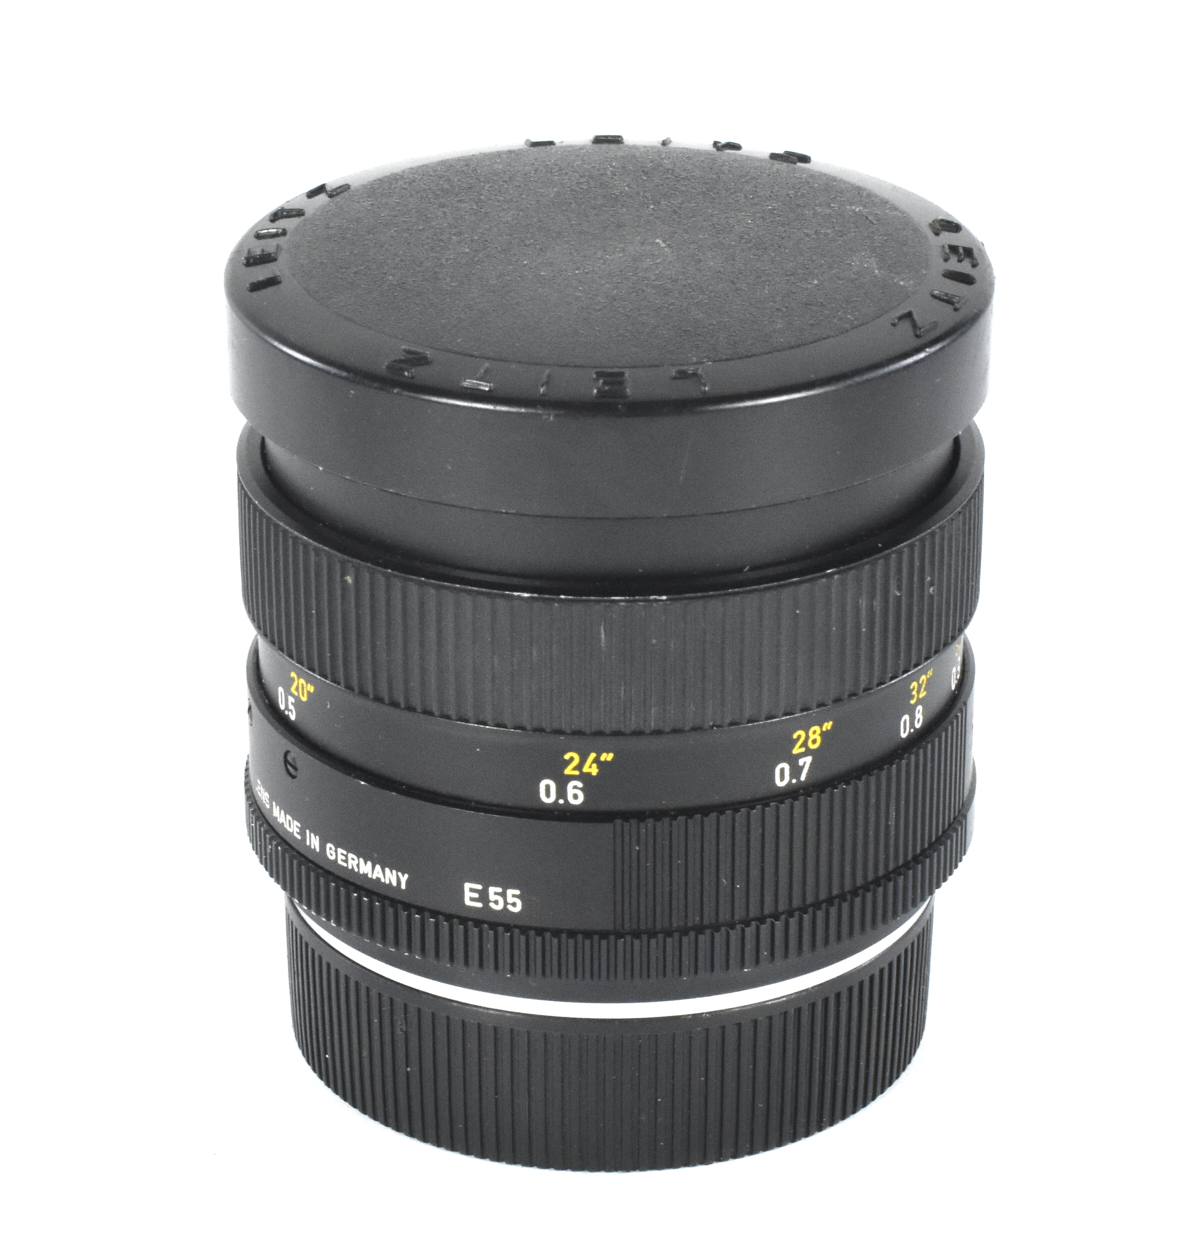 Leitz SummiLux-R 1:1.4/50 Camera Lens with B+W Polarizing Filter - Image 8 of 9